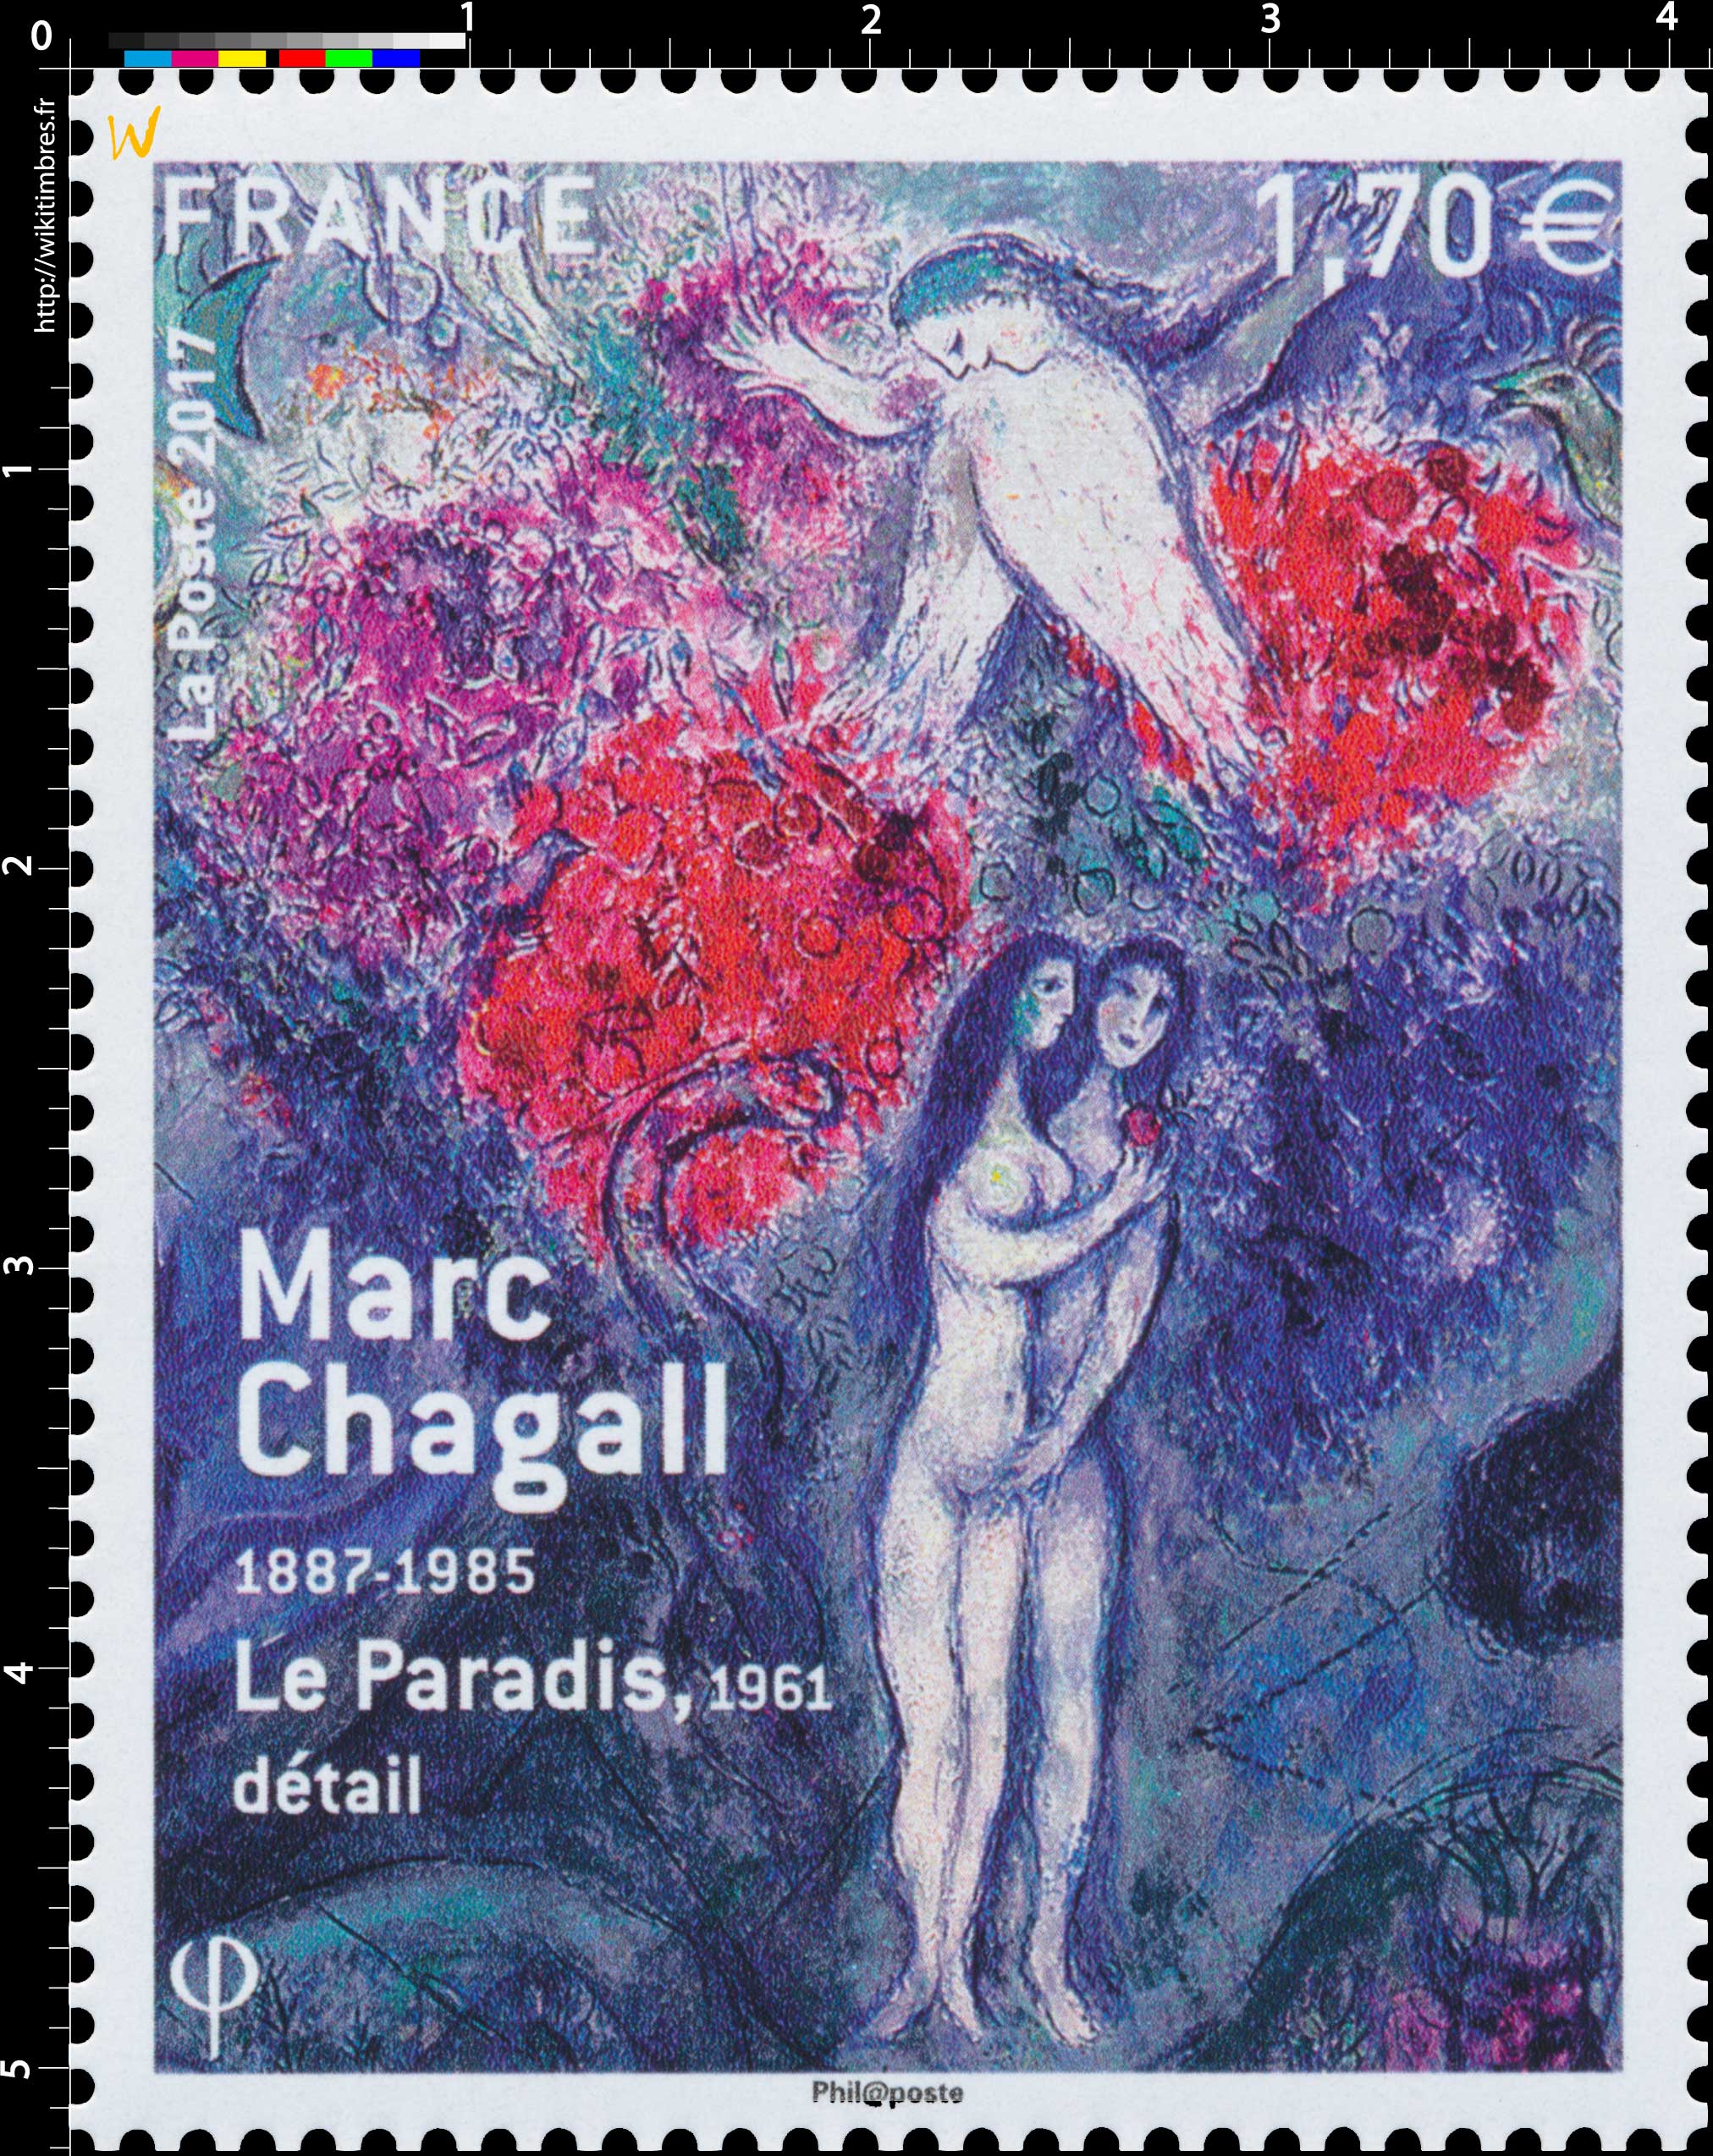 2017 Marc Chagall 1887-1985 - Le paradis 1961